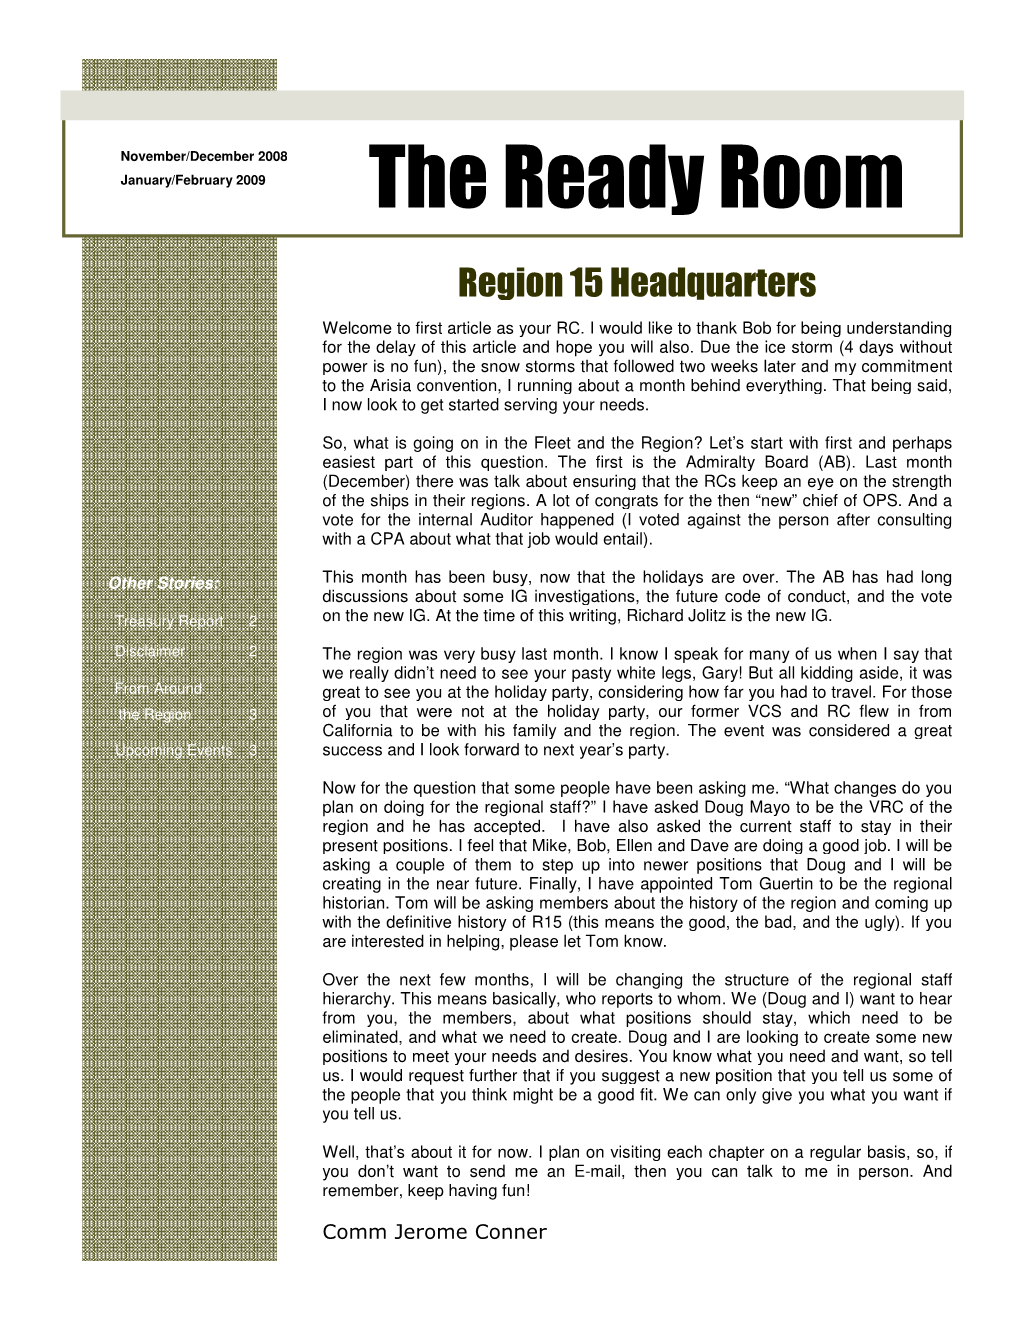 The Ready Room